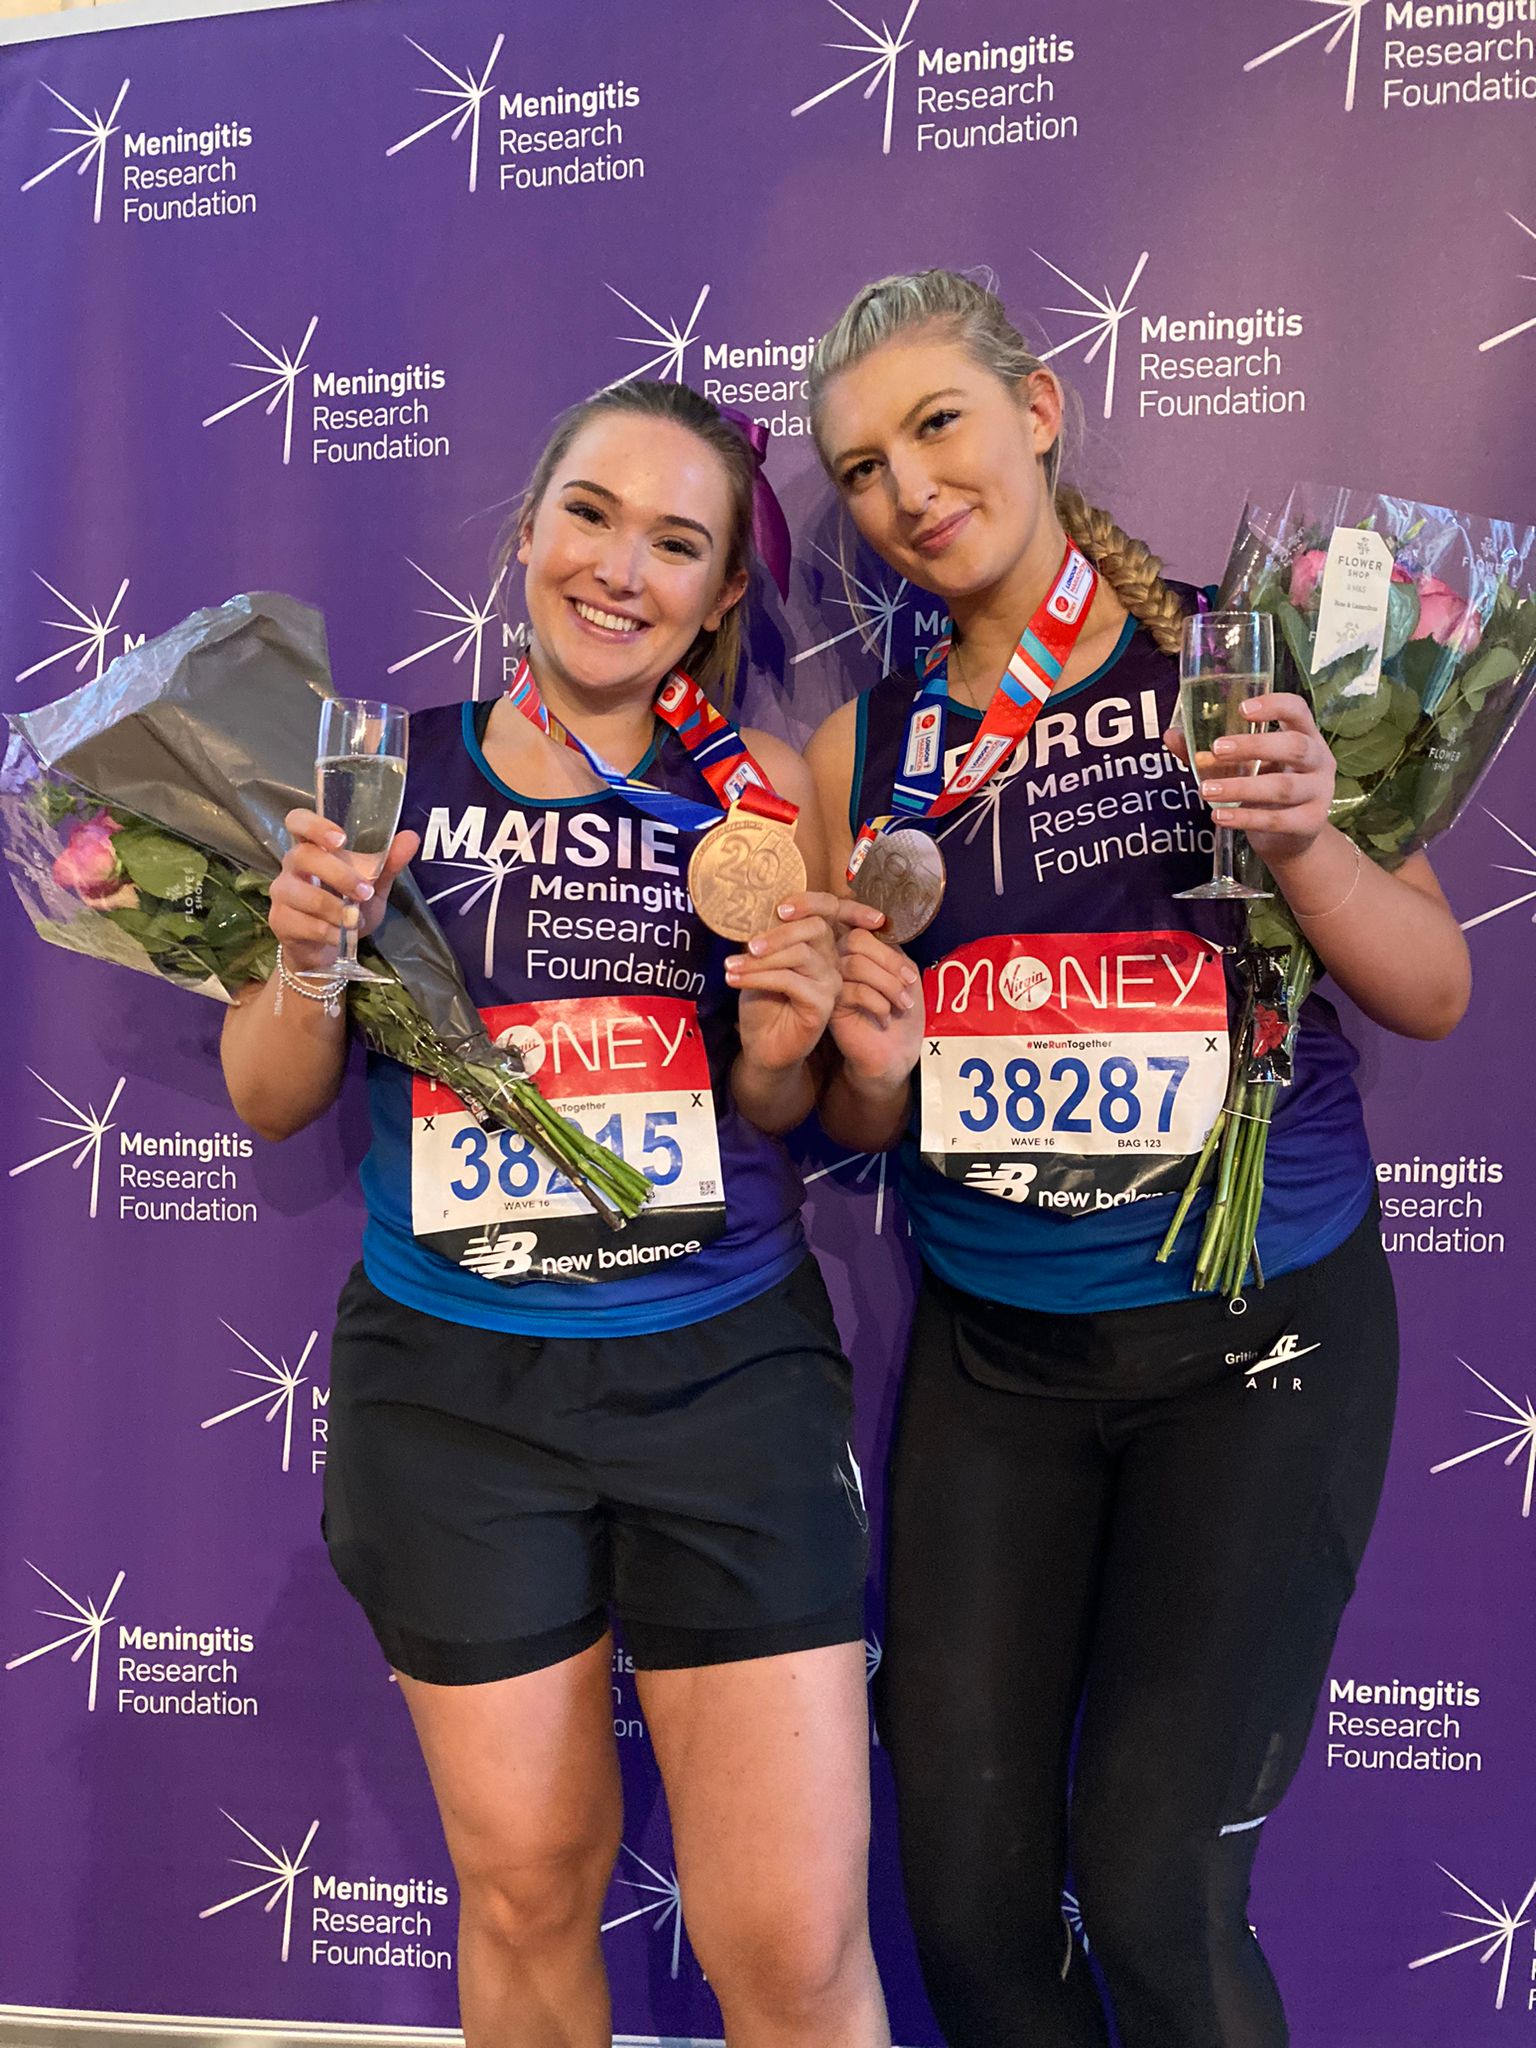 #TeamMRF runners raise over £200,000 at London Marathon 2021